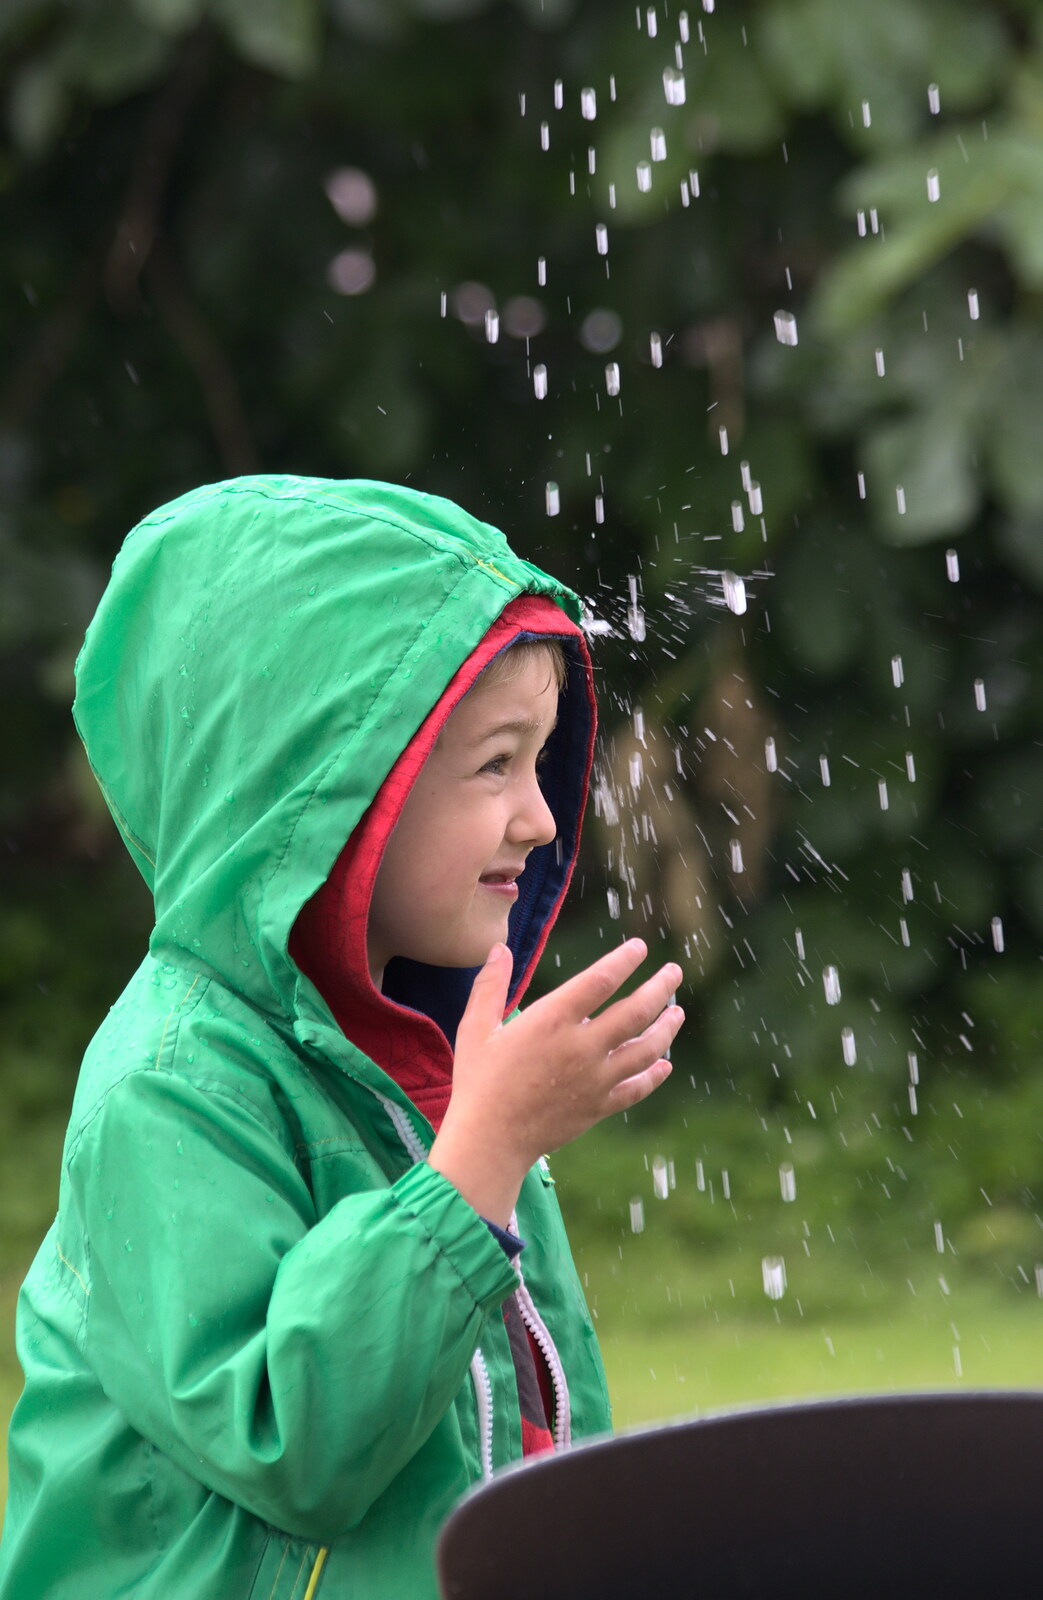 Fred's enjoying messing around in the rain from Thrandeston Pig, Little Green, Thrandeston, Suffolk - 29th June 2014